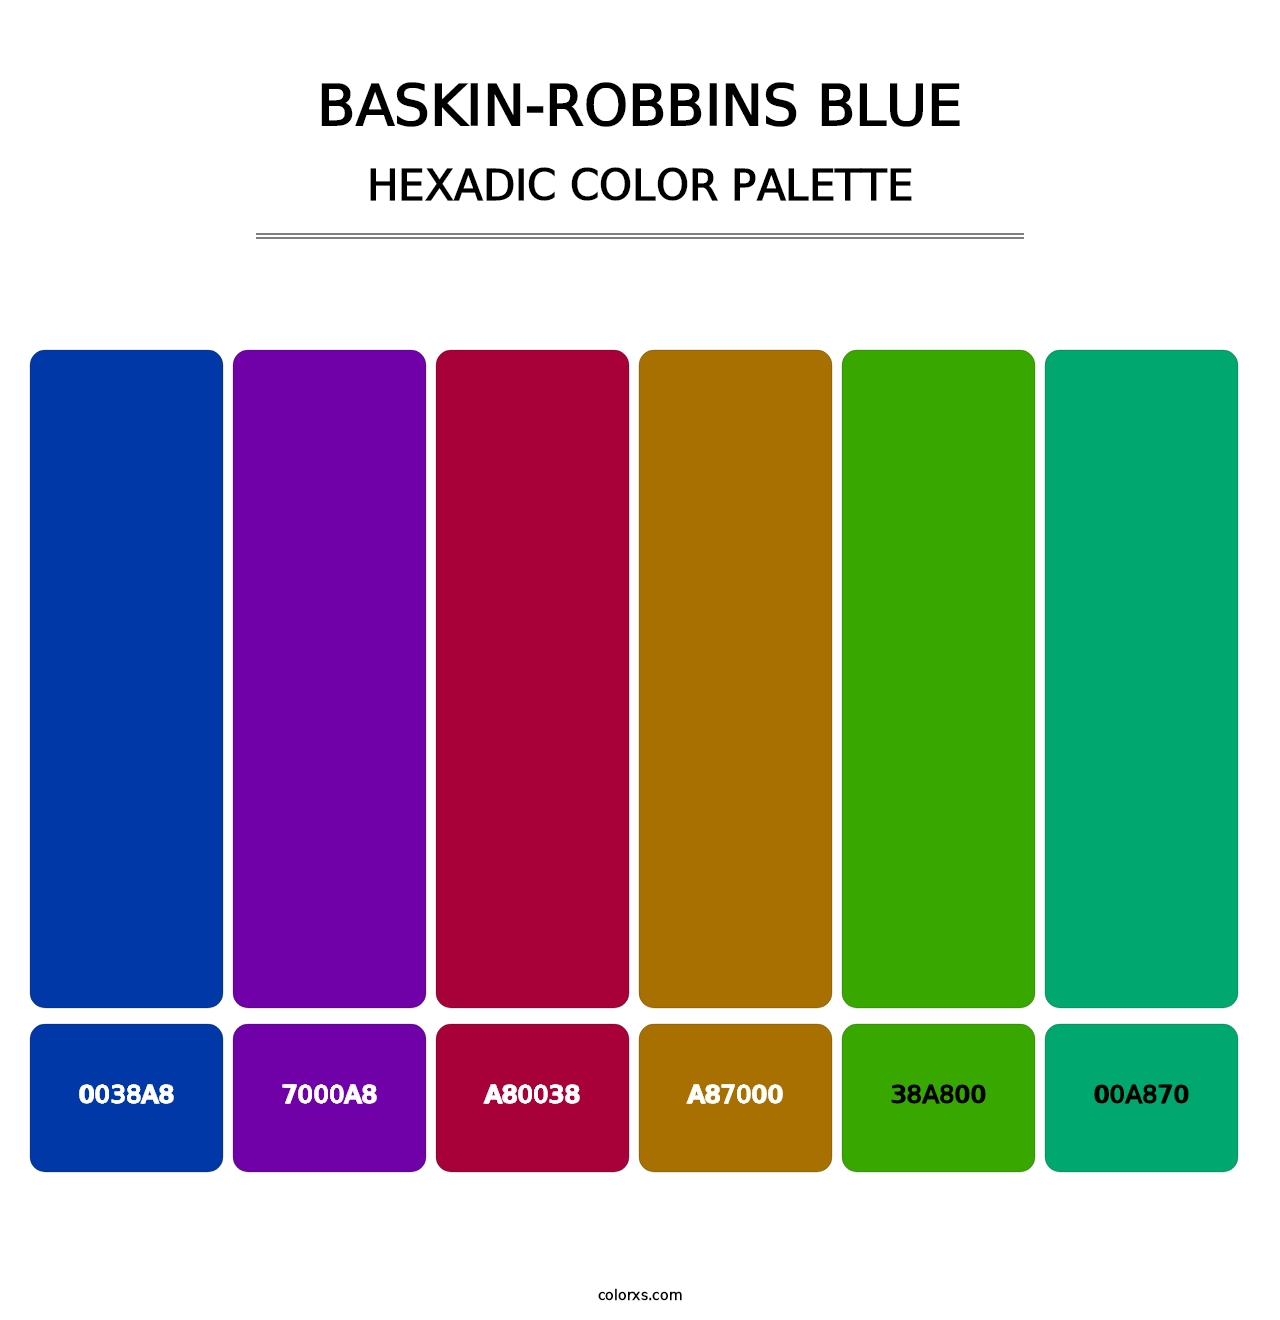 Baskin-Robbins Blue - Hexadic Color Palette